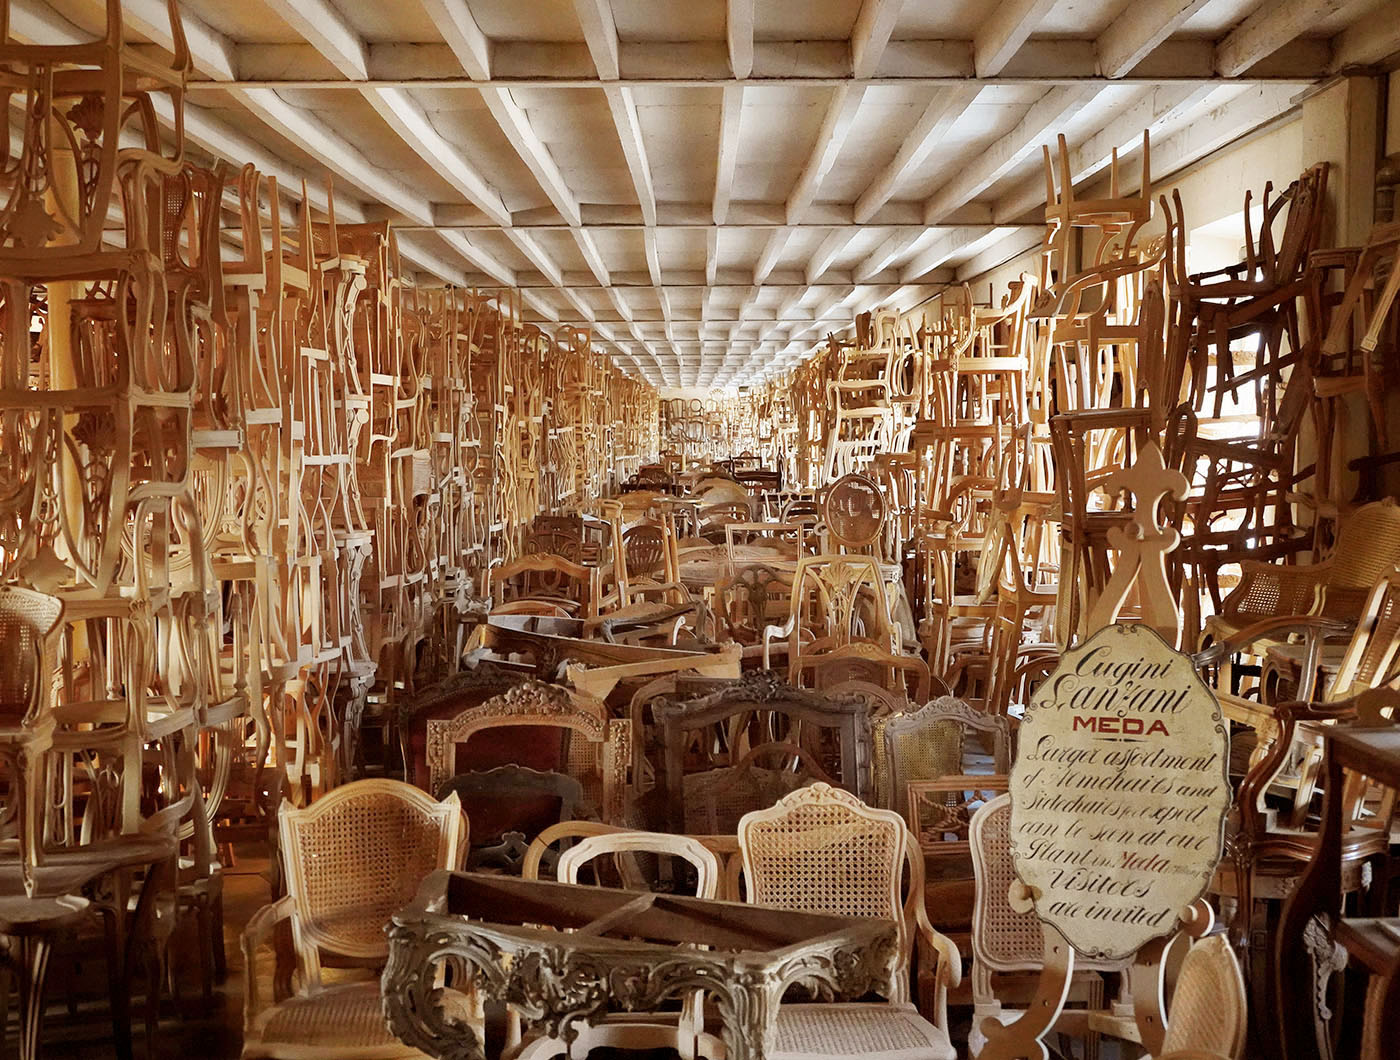 Cugini Lanzani antique chair museum, furniture private collection, classical archive | P.& G. Cugini Lanzani